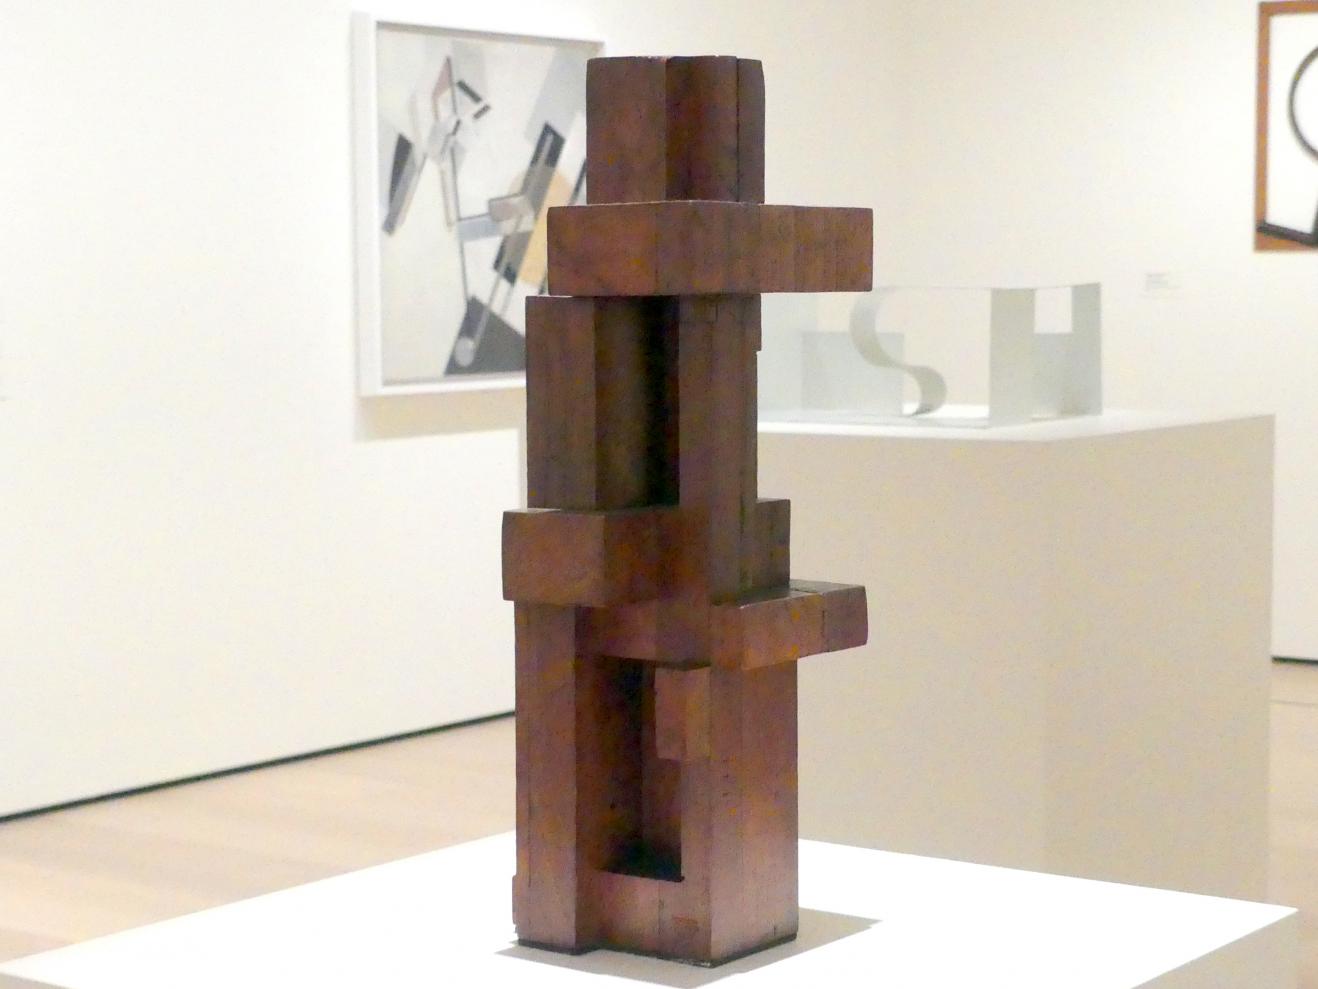 Georges Vantongerloo (1921–1936), Konstruktion von Volumenbeziehungen, New York, Museum of Modern Art (MoMA), Saal 512, 1921, Bild 2/5